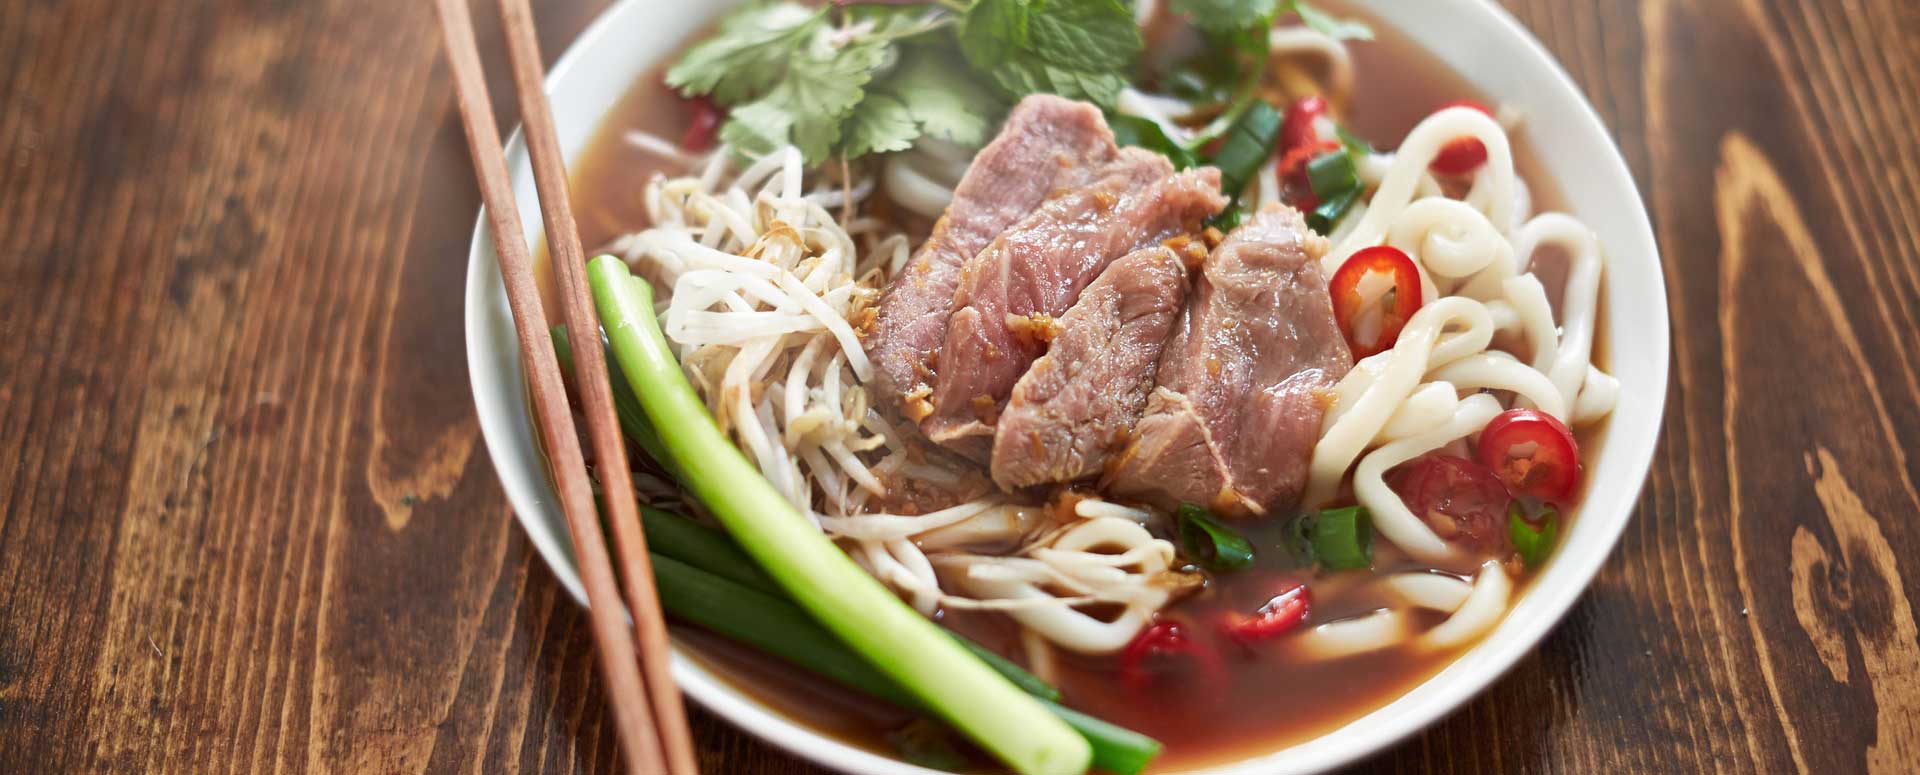 a bowl of pho, a vietnamese soup